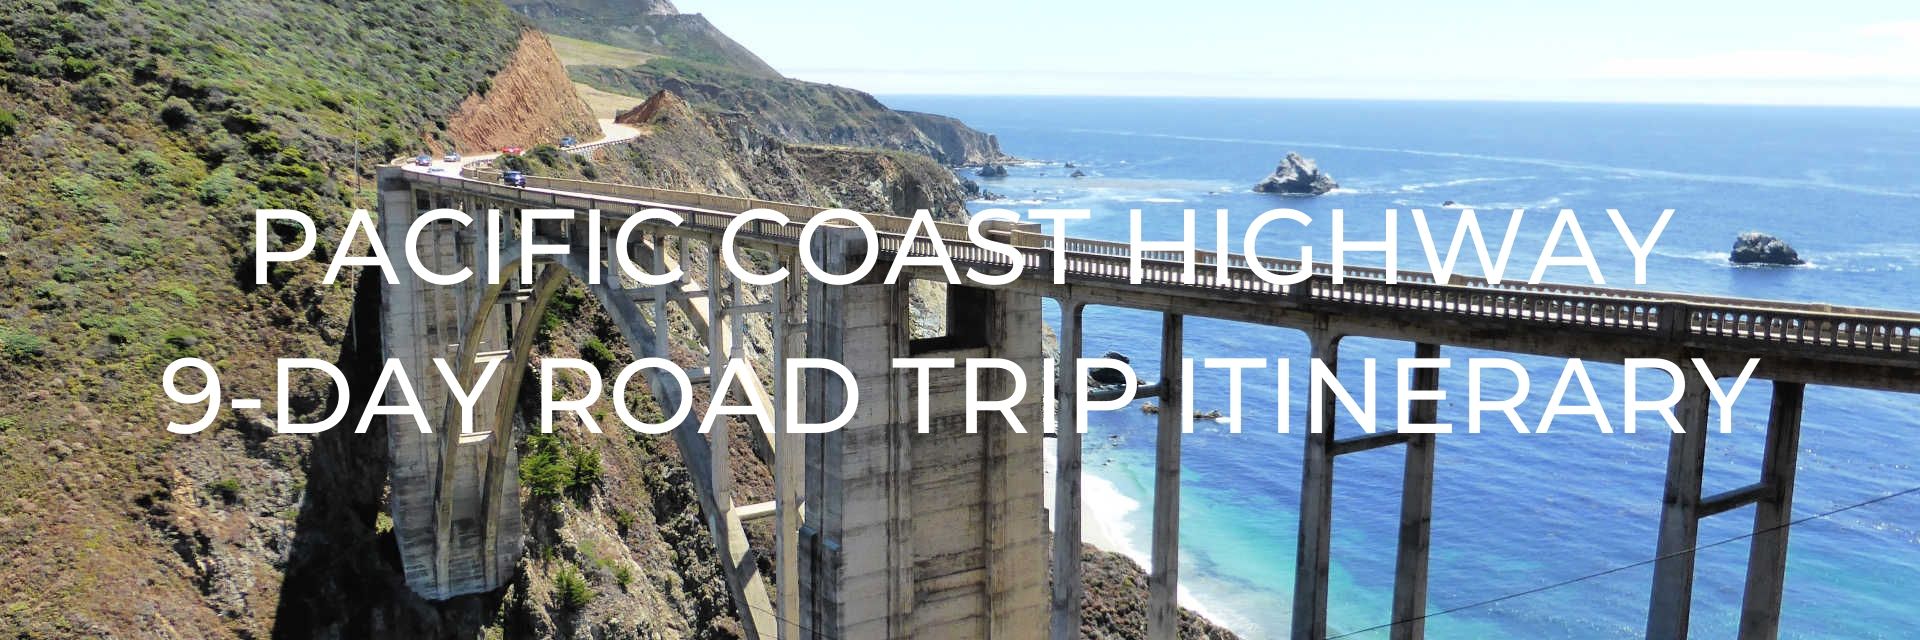 California Pacific Coast Highway Desktop Image